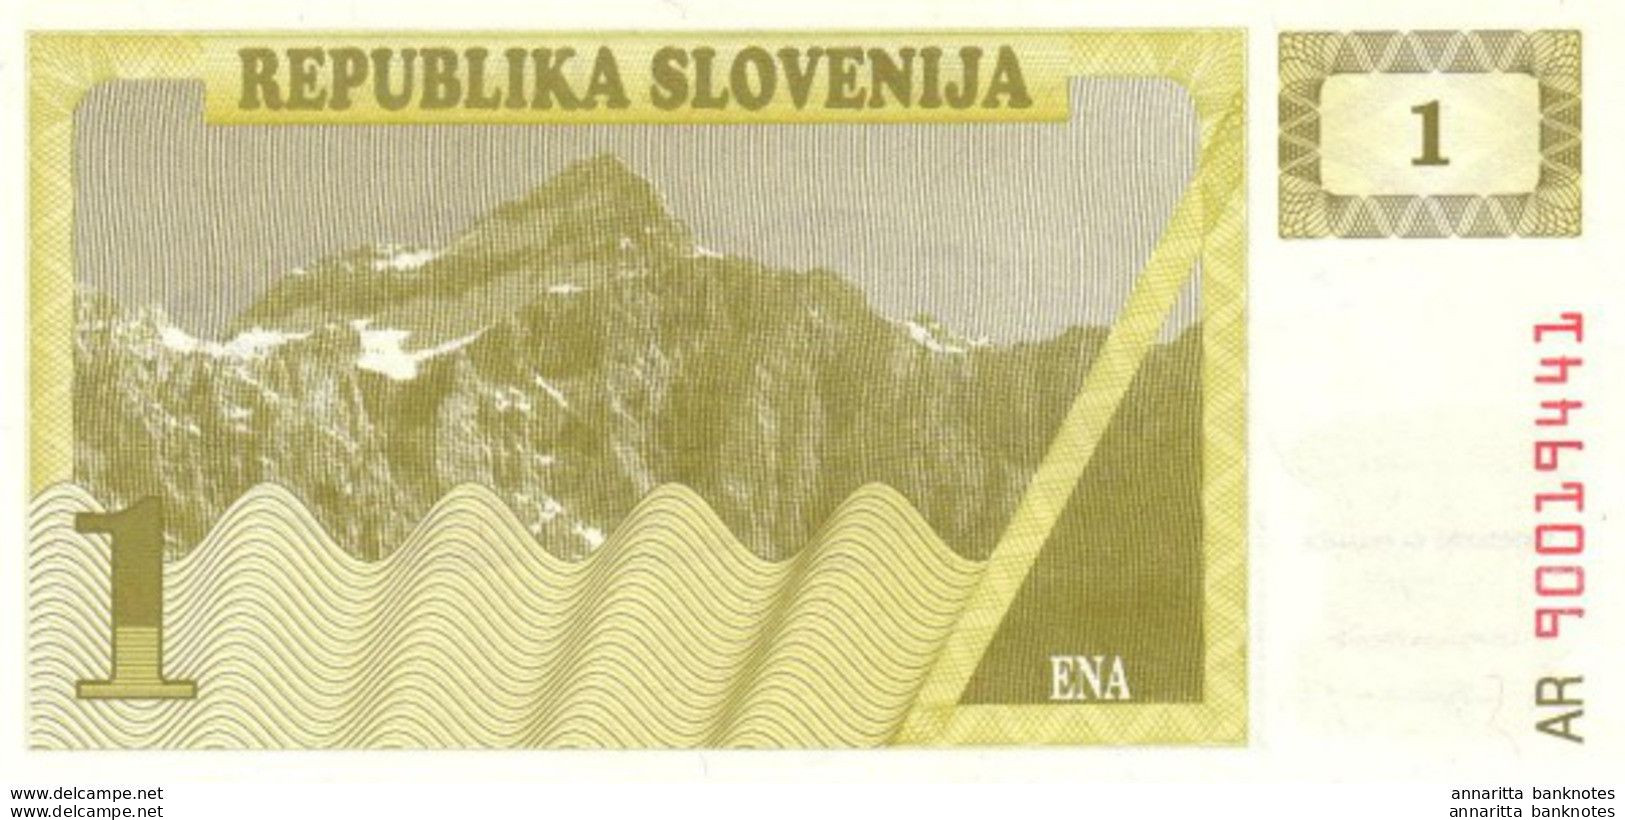 Slovenia 1 Tolar ND (1990), UNC (P-1a, B-201a) - Slovenia